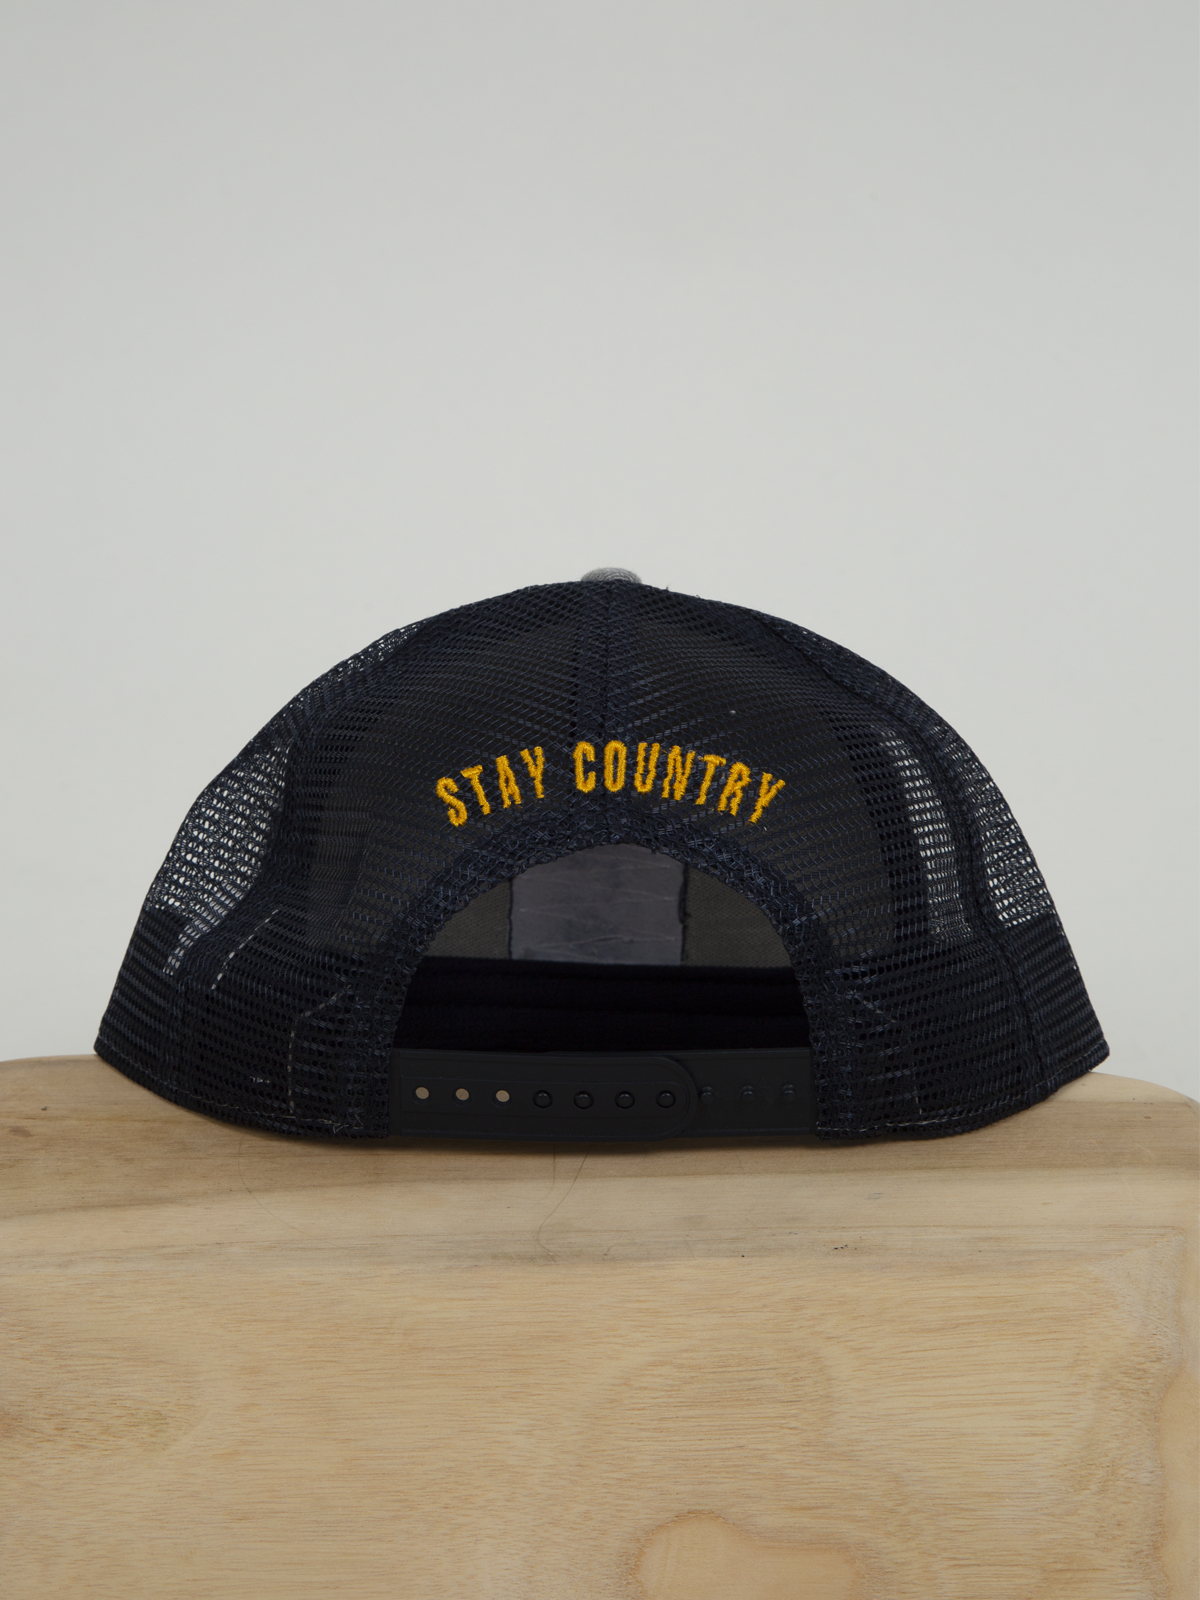 Stay country grey hat back Dustin Lynch